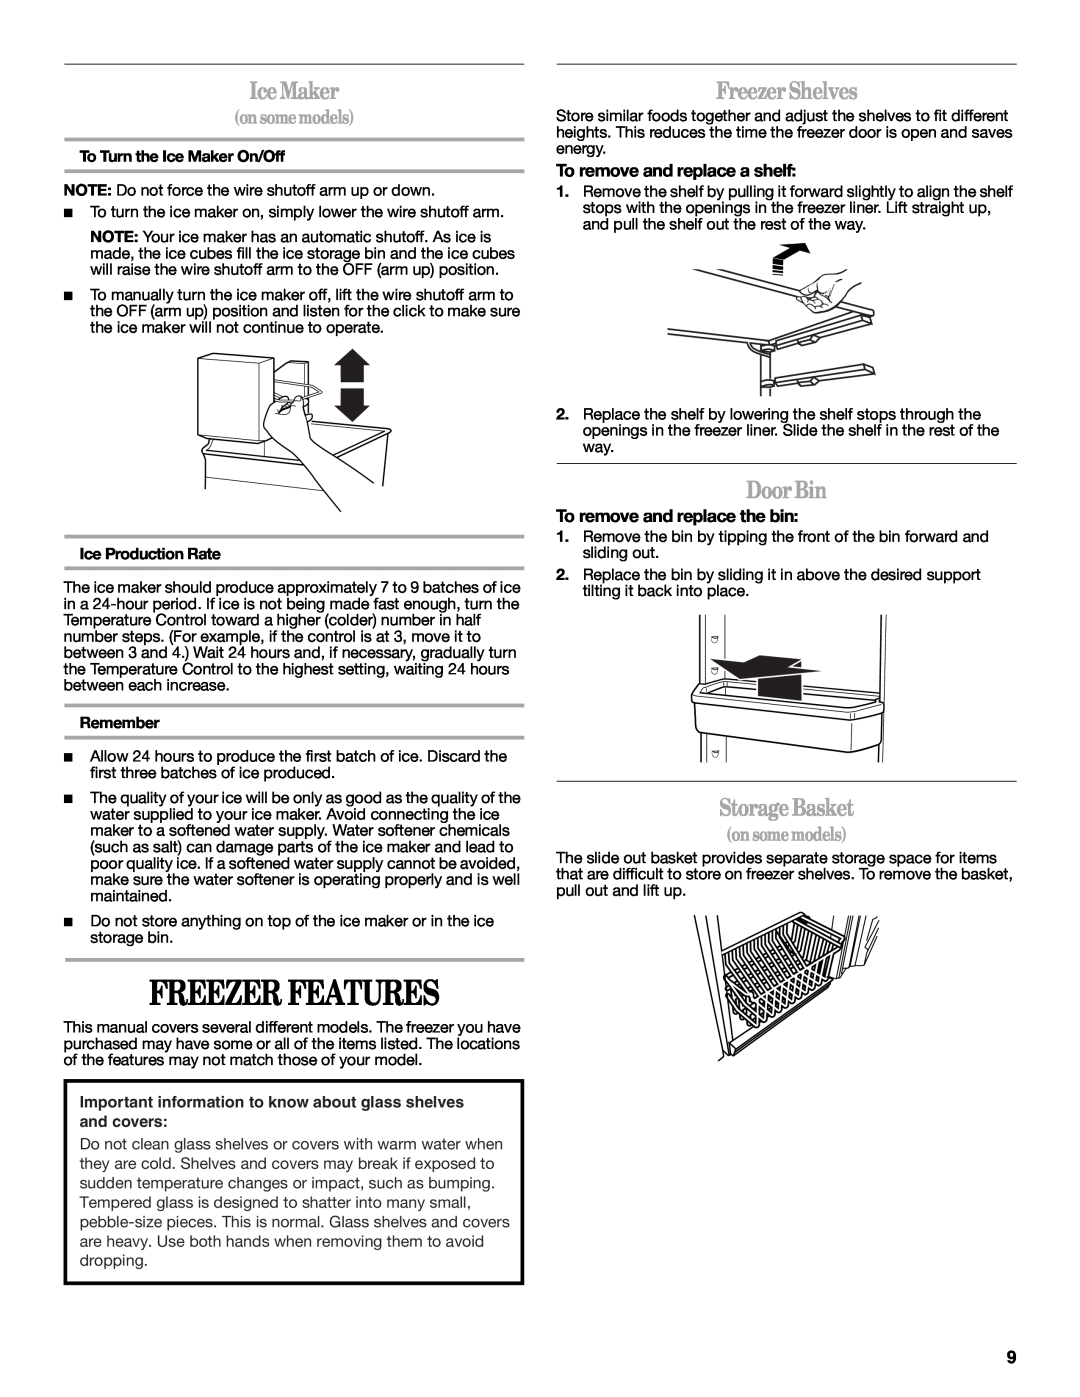 Whirlpool W10326801A manual Freezer Features, Ice Maker, Freezer Shelves, Door Bin, Storage Basket, on somemodels, Remember 